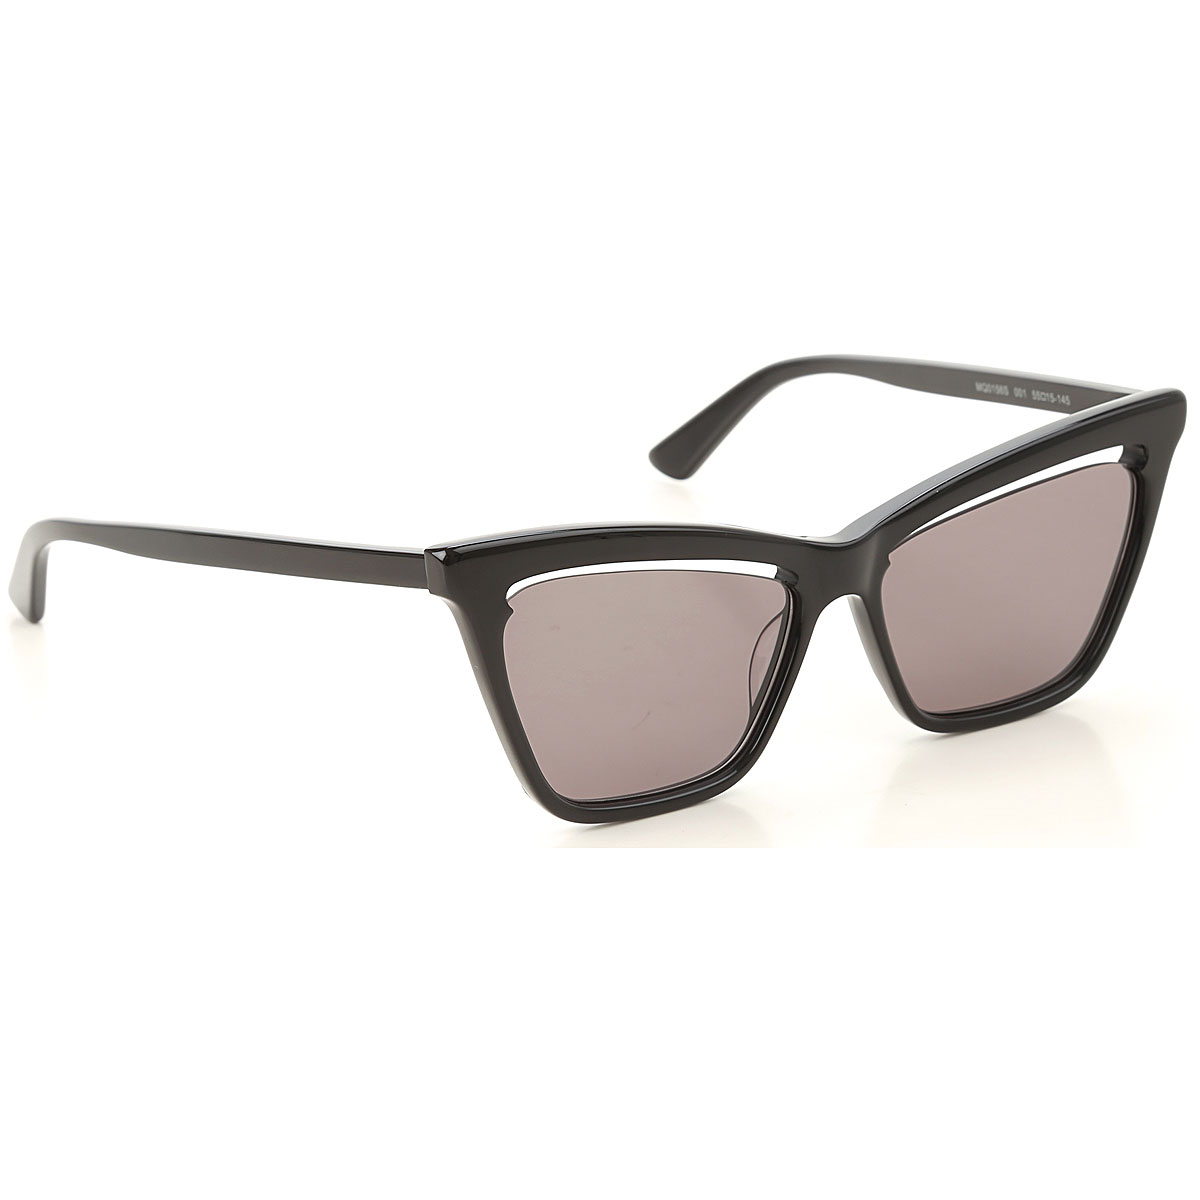 Sunglasses Alexander McQueen McQ, Style code: mq0156s-001-N14